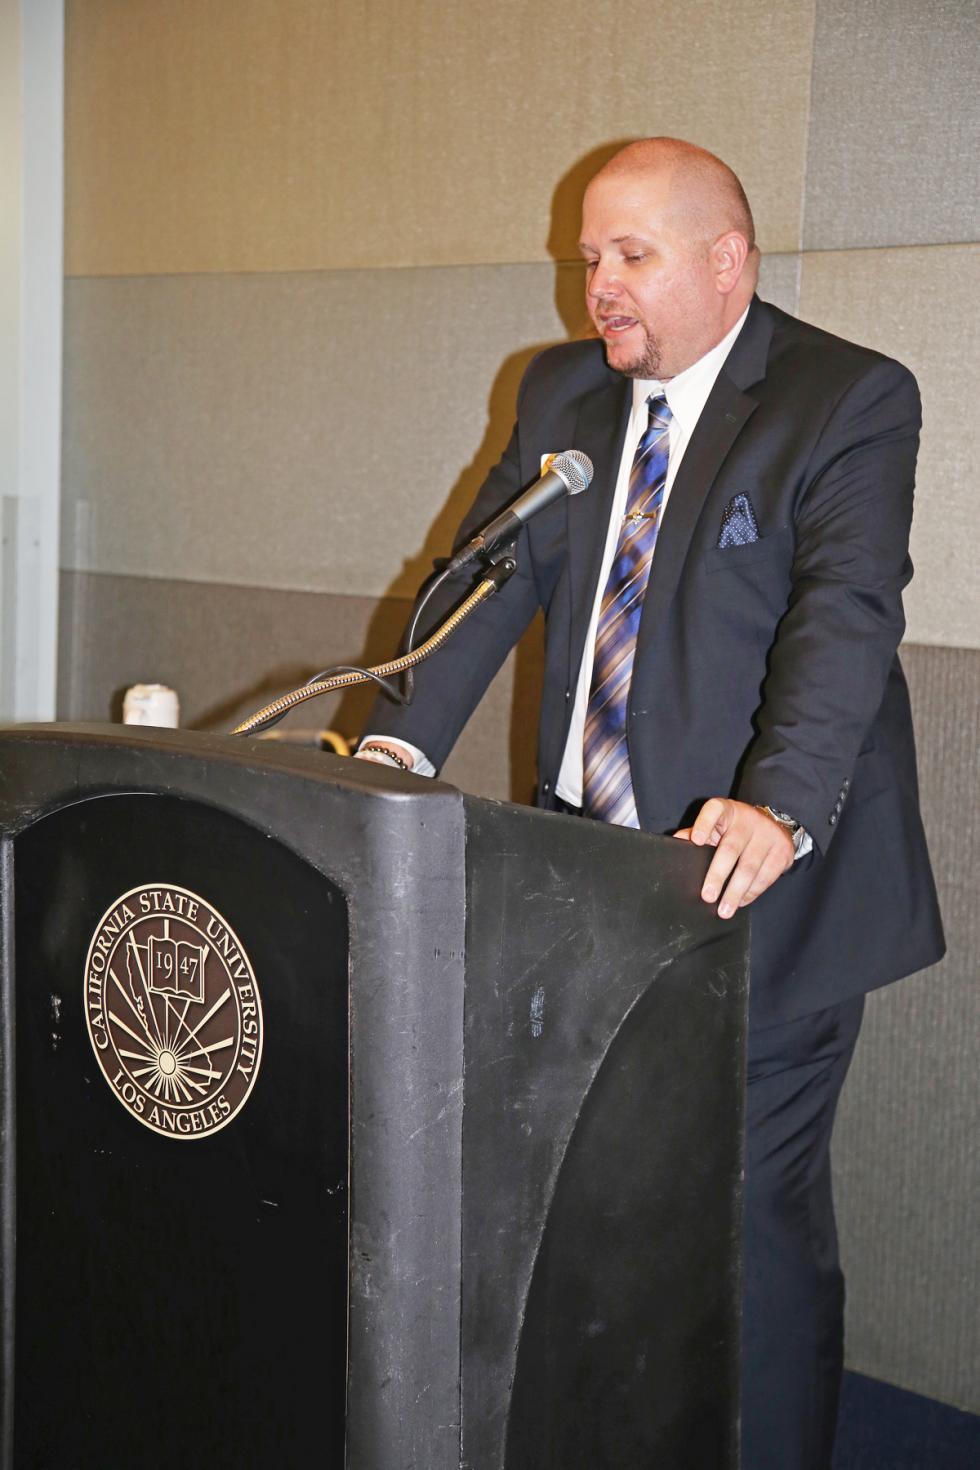 J,Steele, man wearing suit and tie,behind podium 